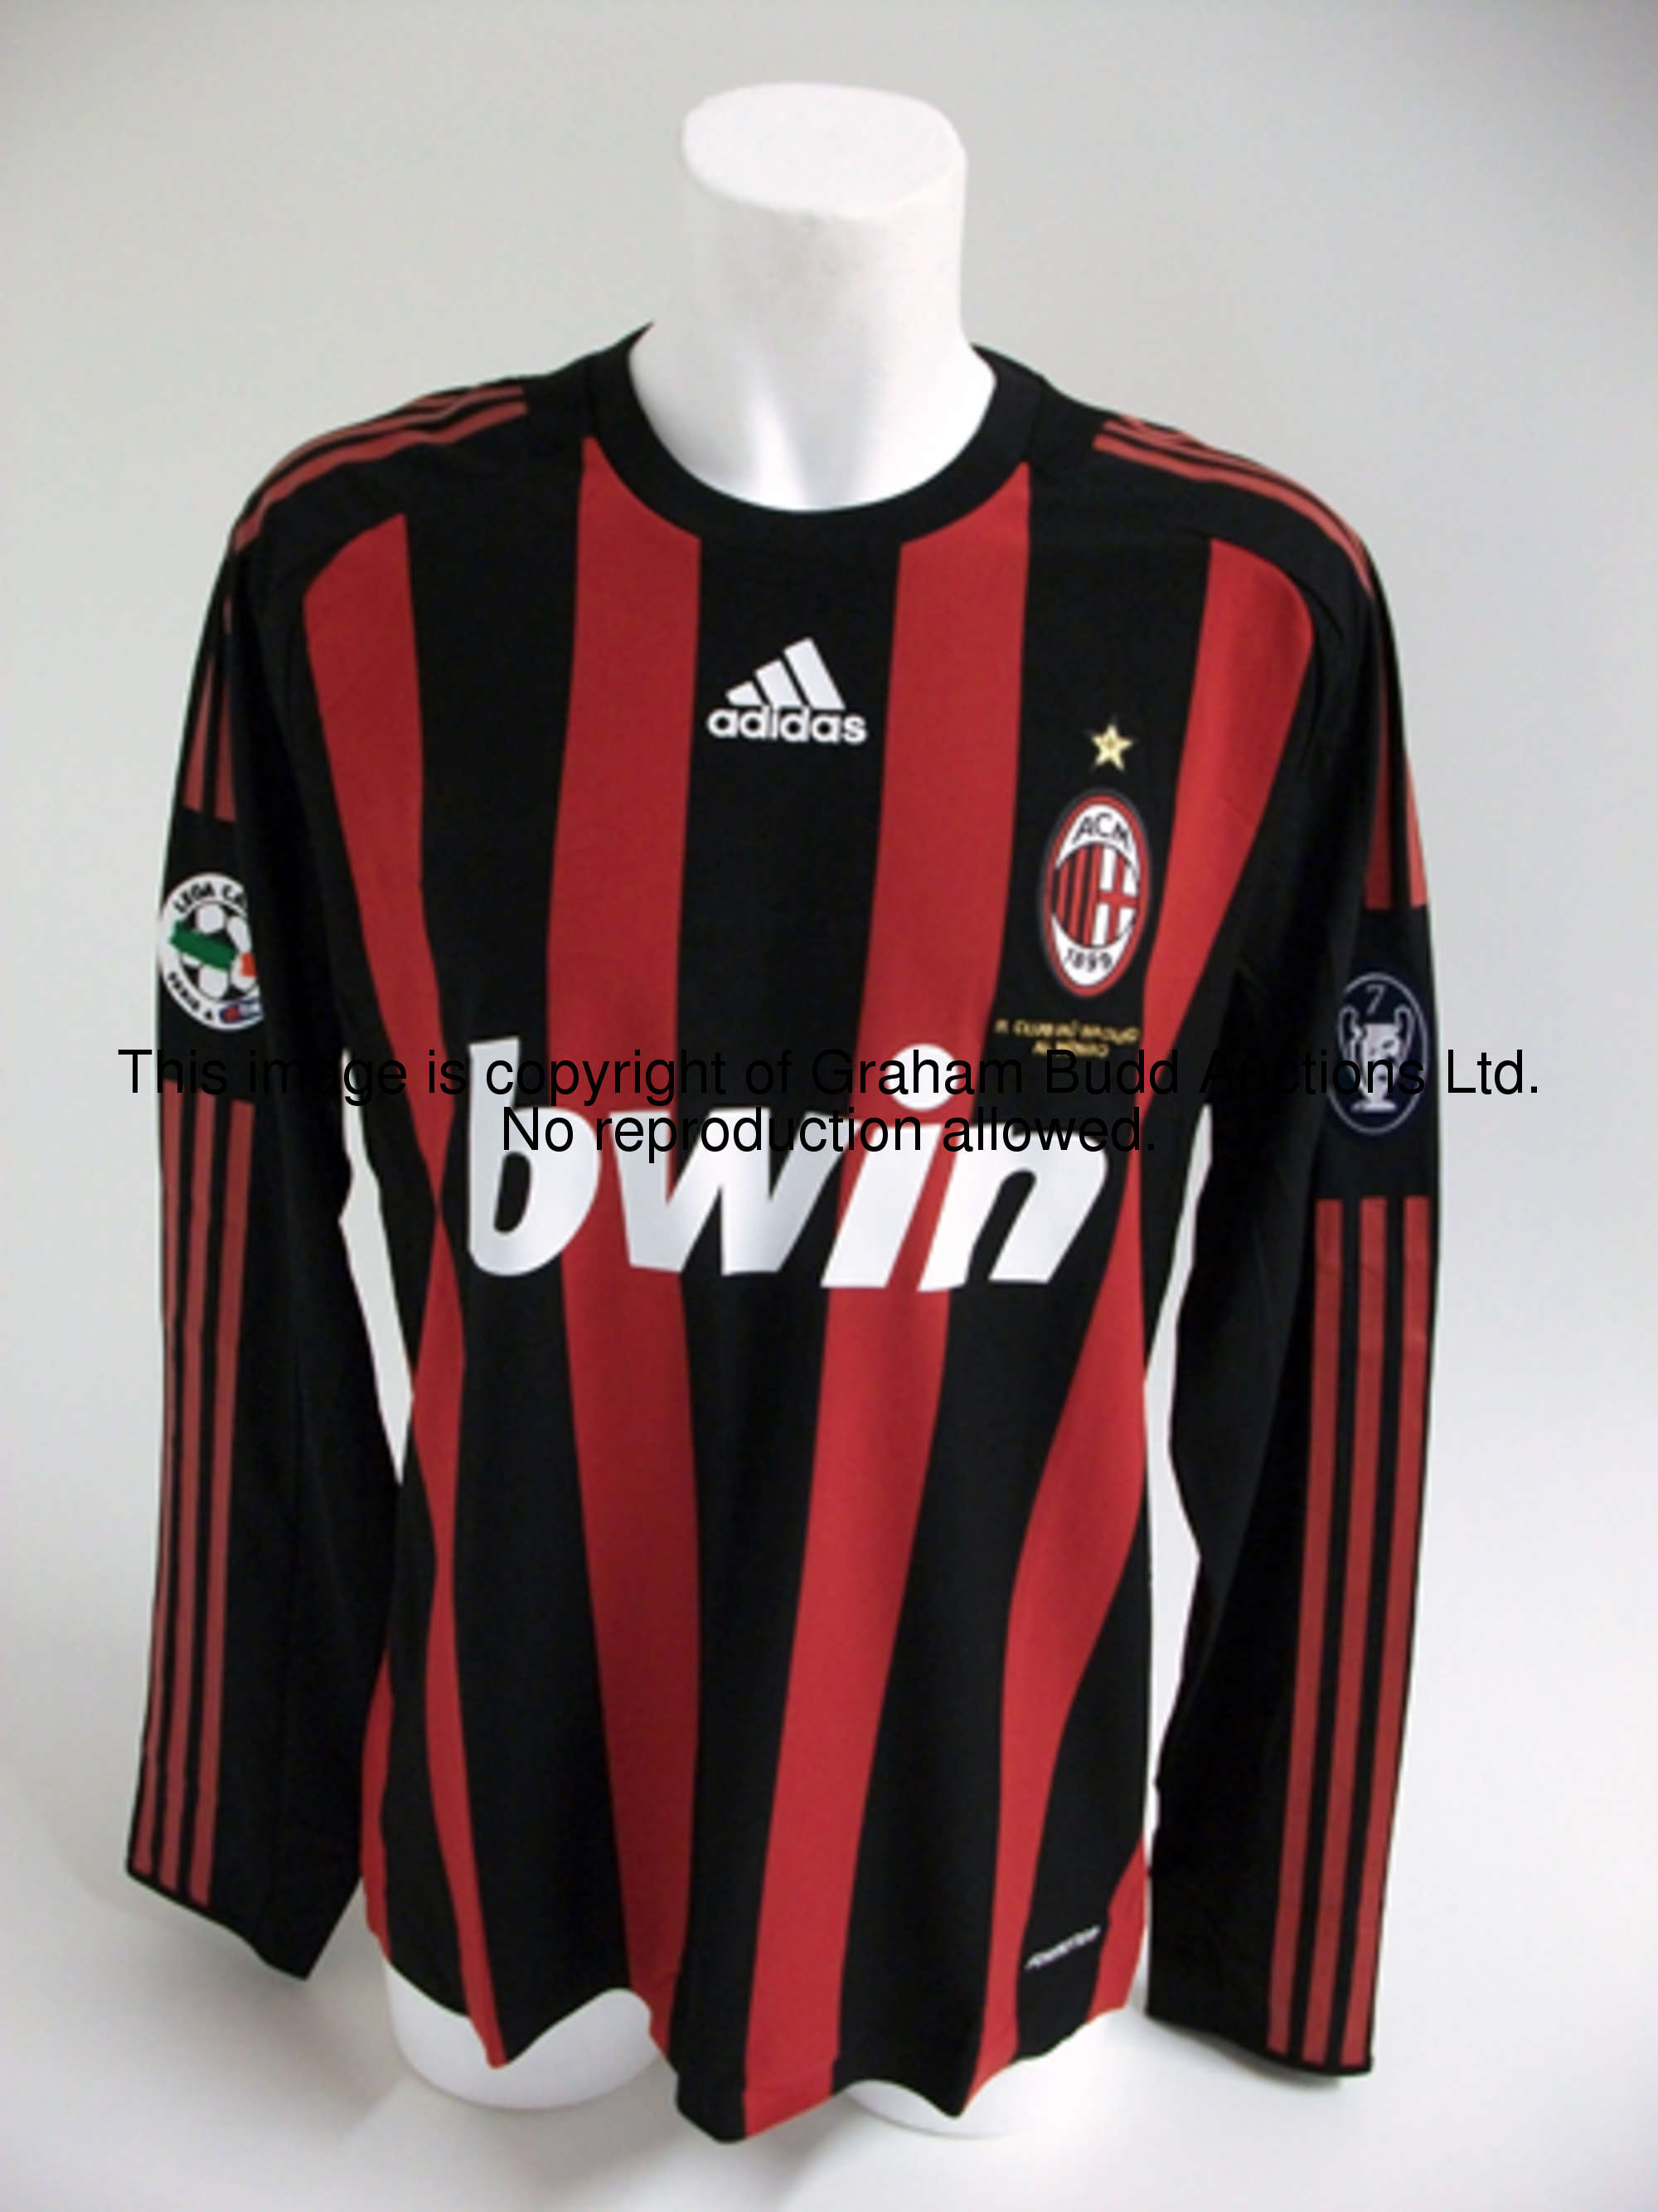 David Beckham: a pair of AC Milan Serie A No.32 jerseys season 2009-10, a red & black striped home i...